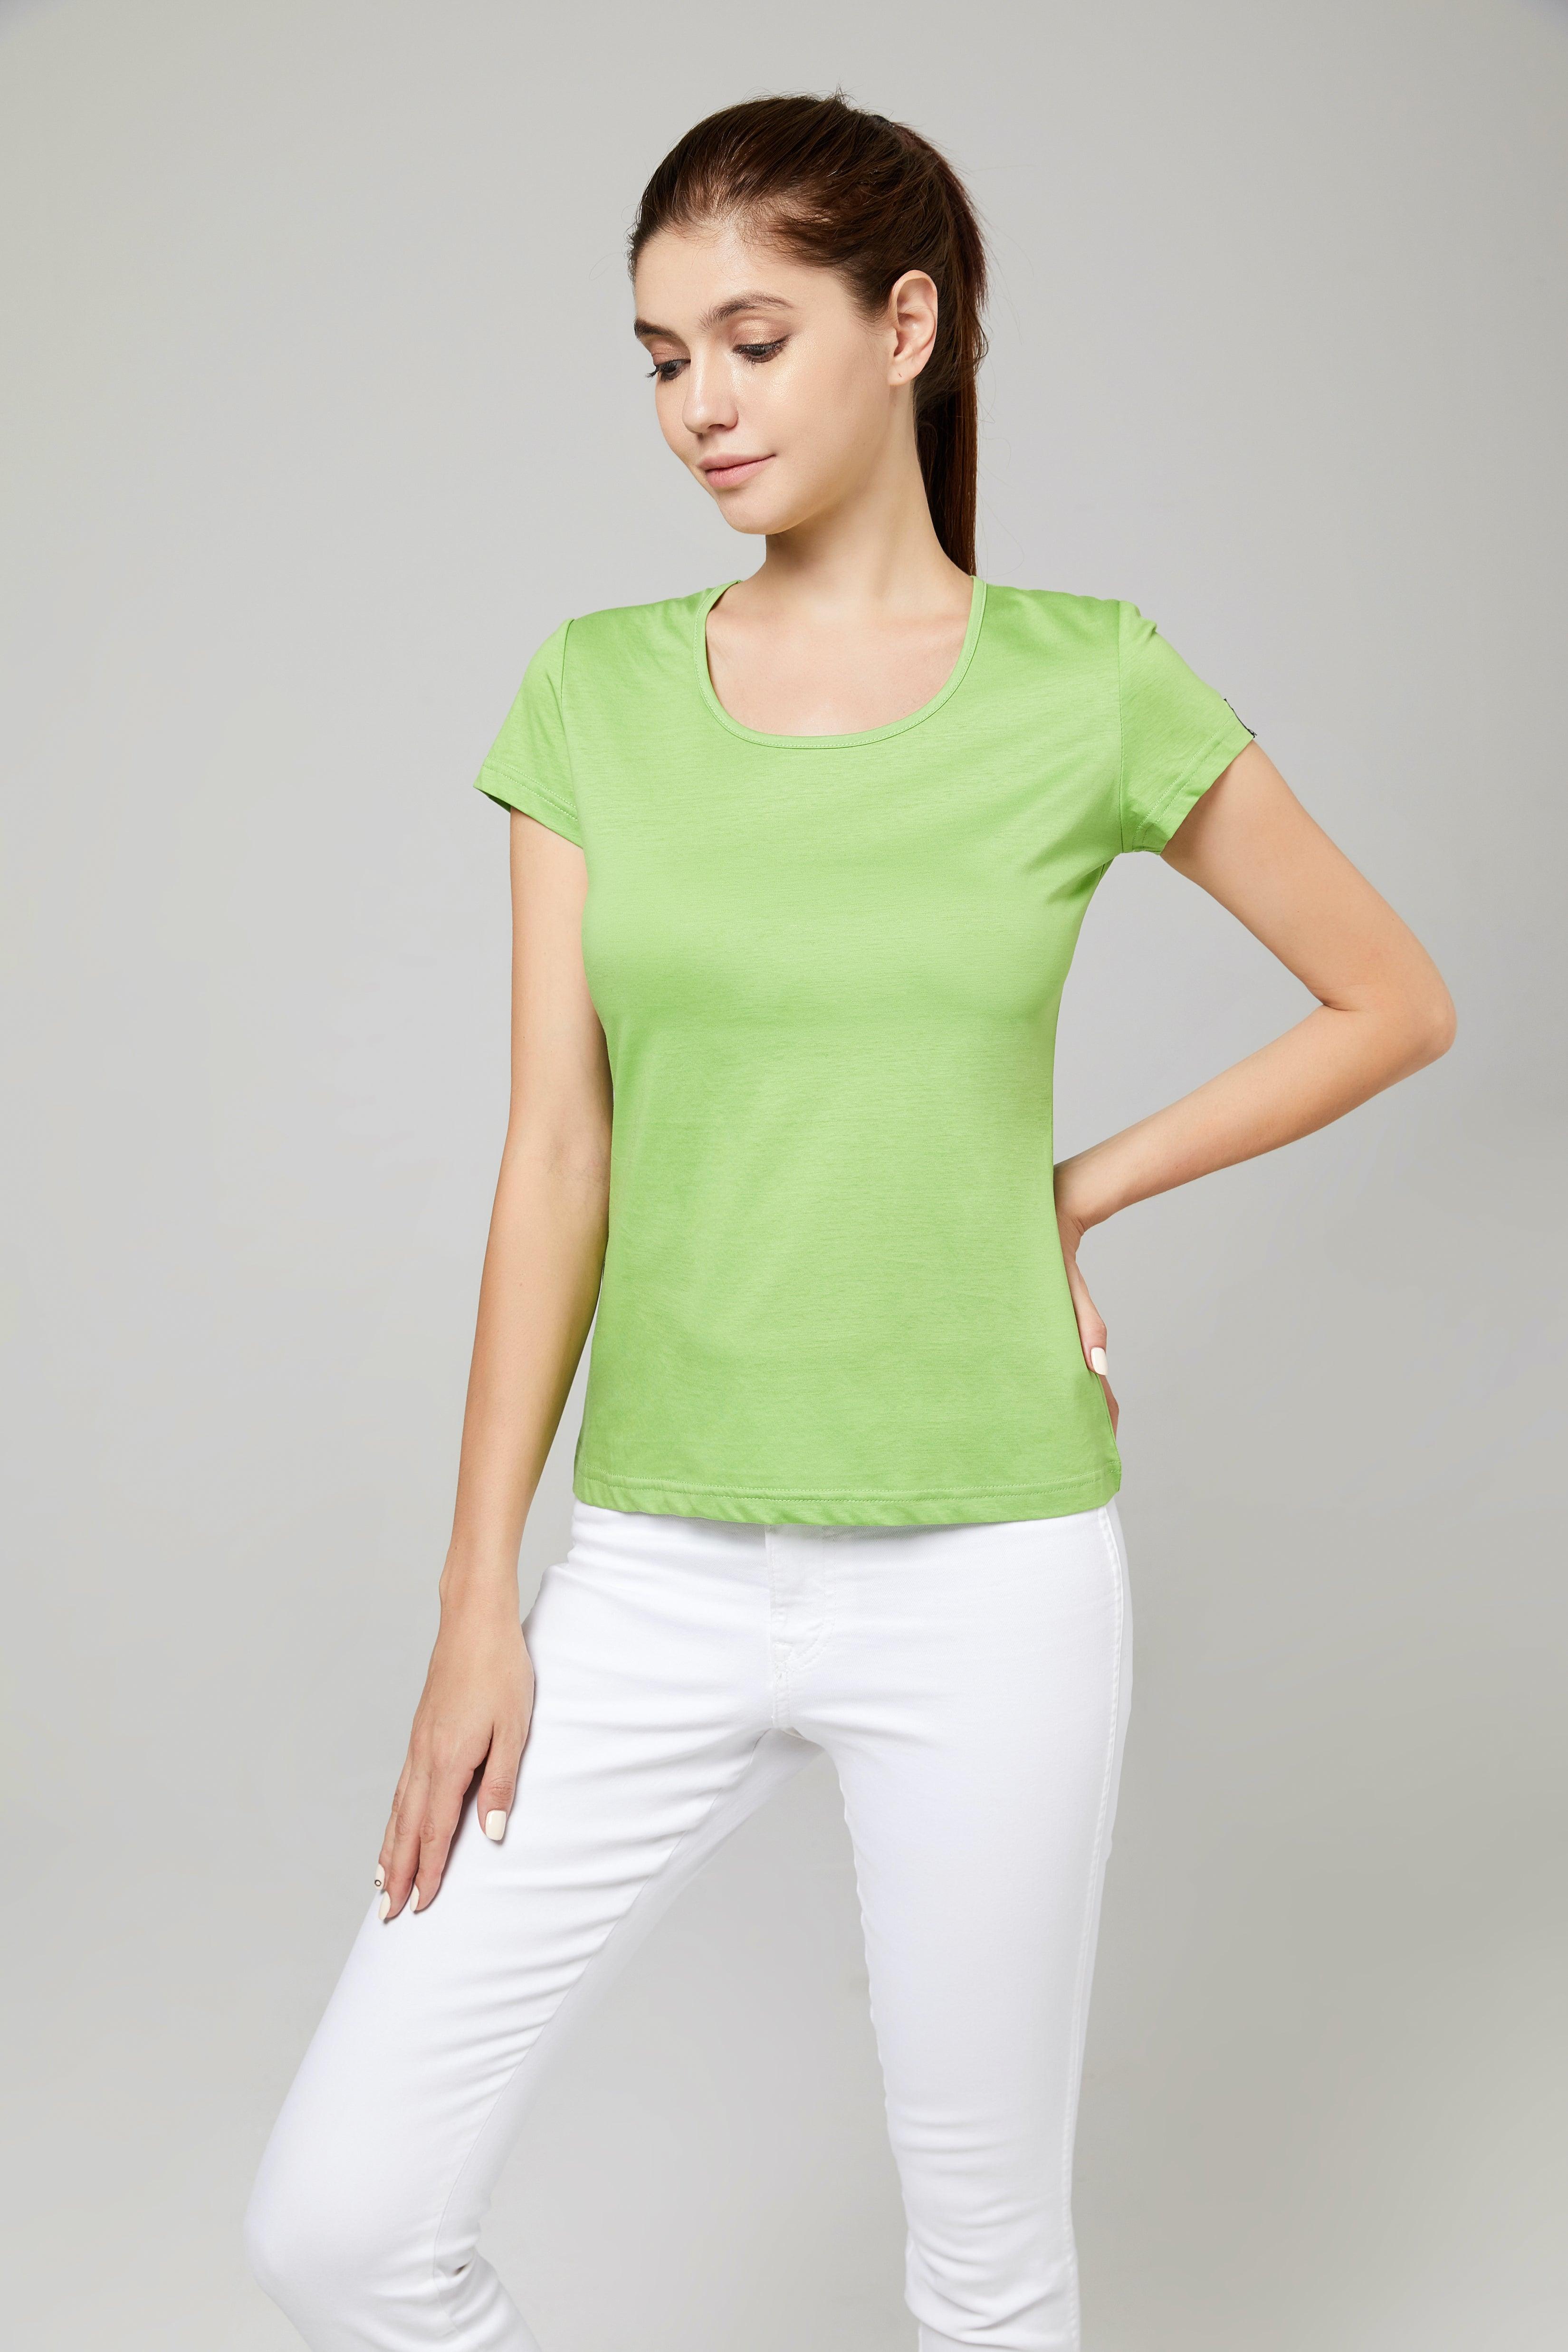 Ultra-thin 135 cotton T shirt